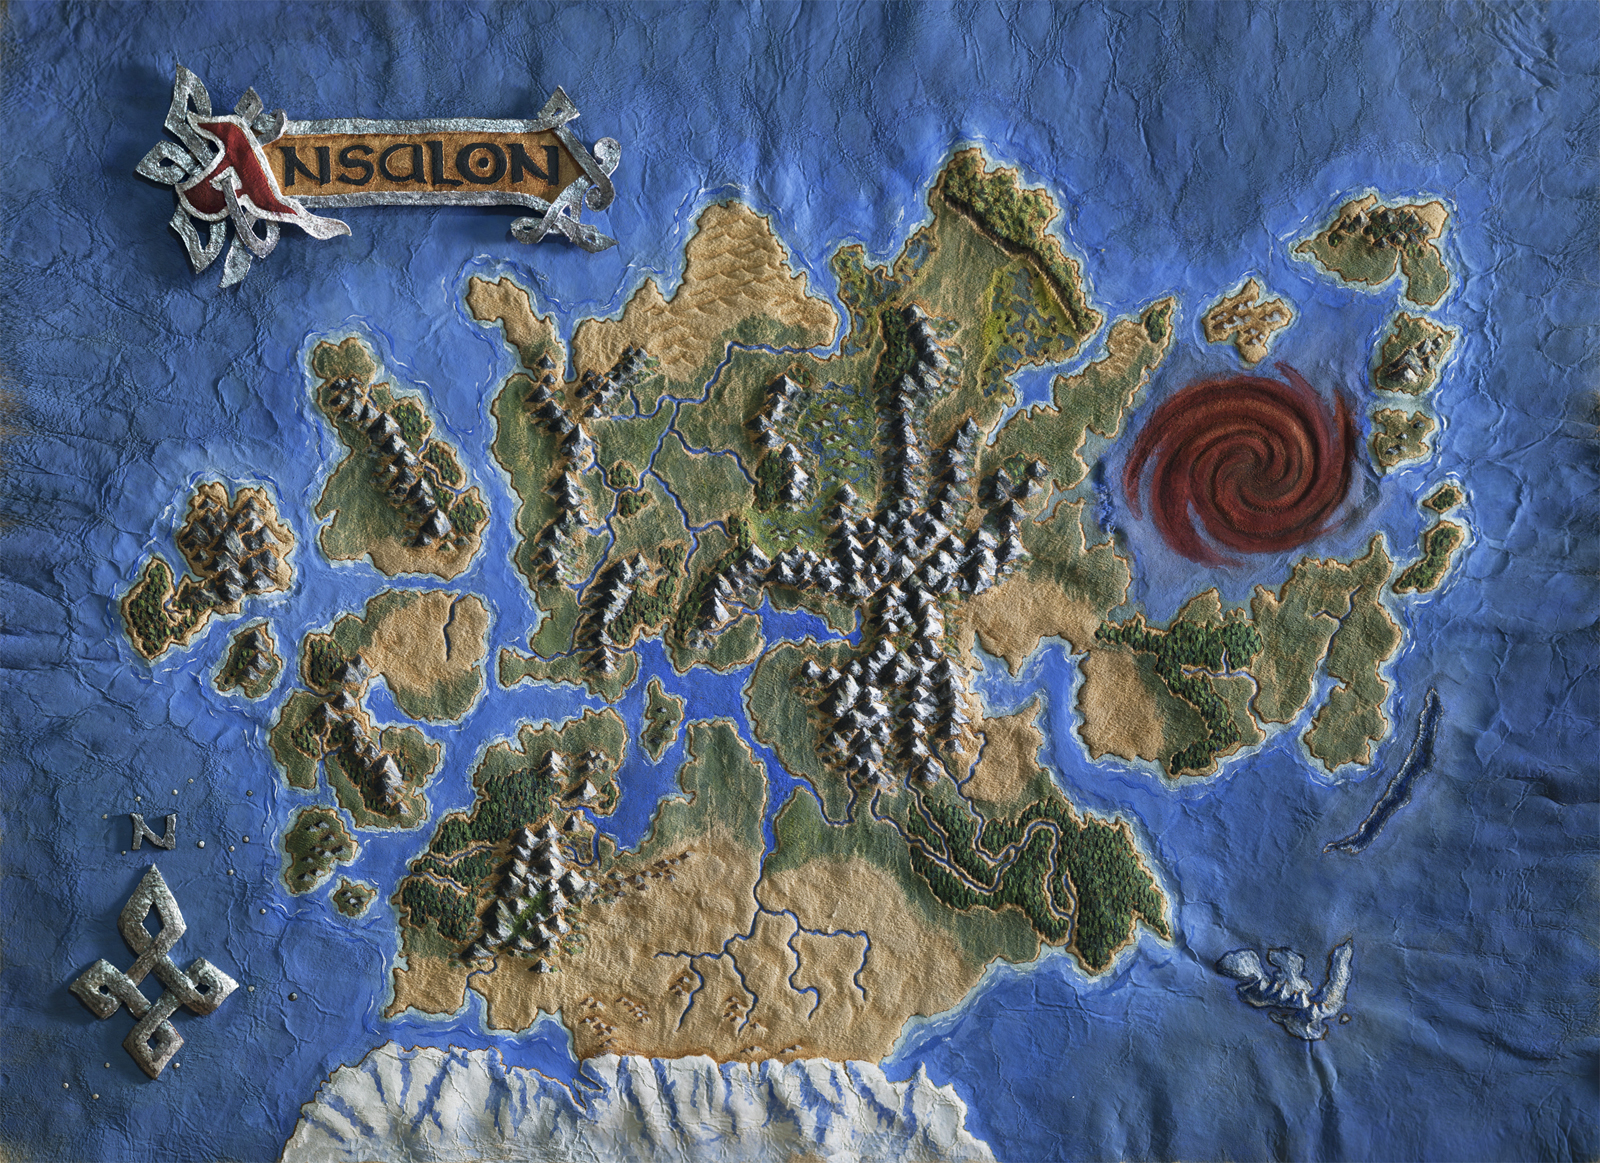 Dragonlance – Ansalon World Map Reproduction